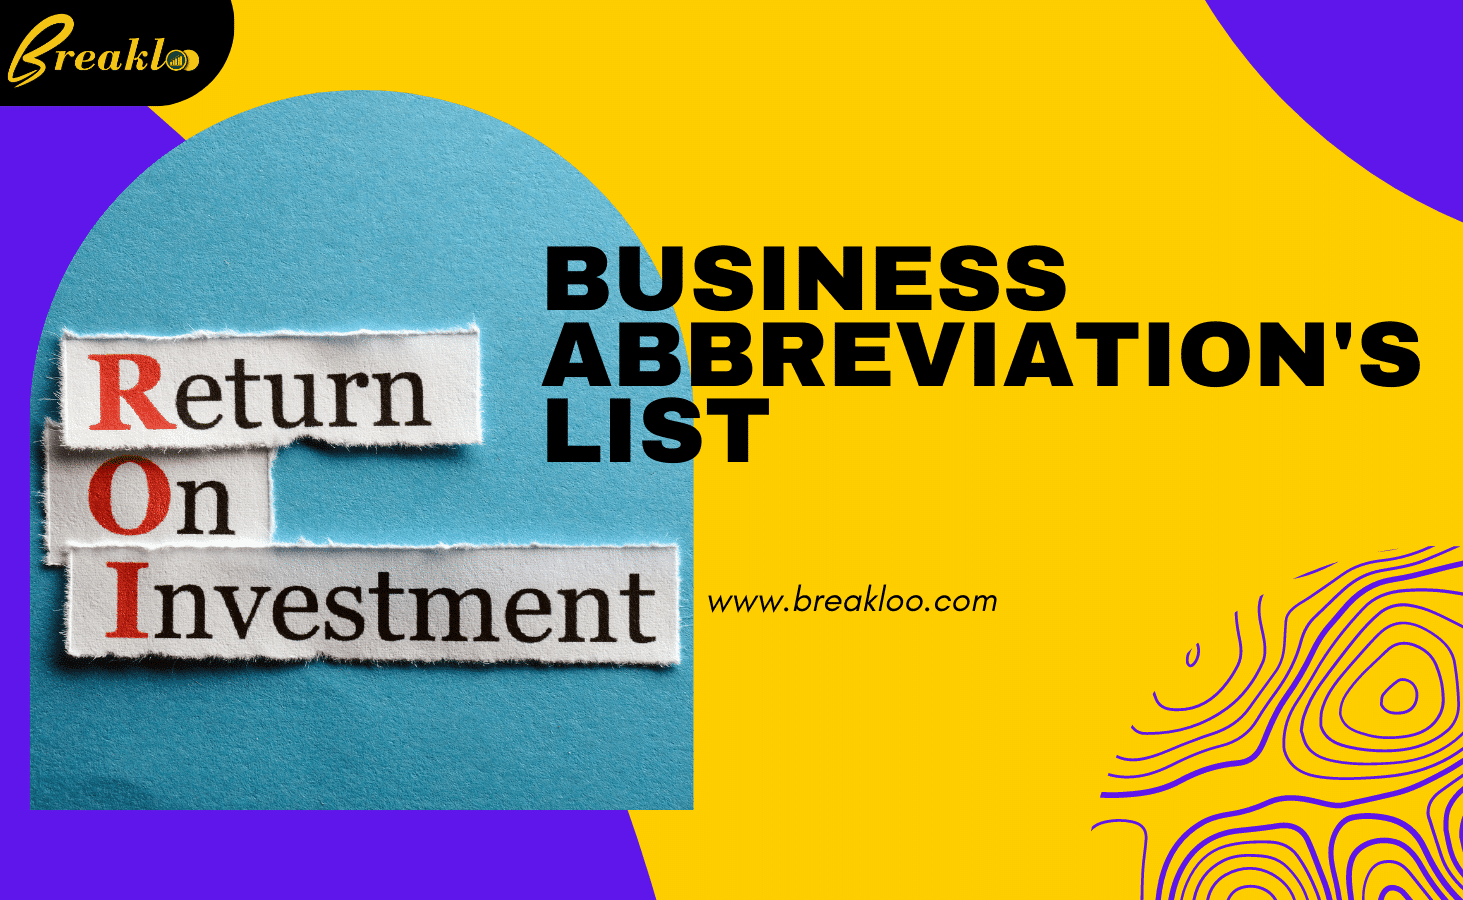 Business Abbreviation's List